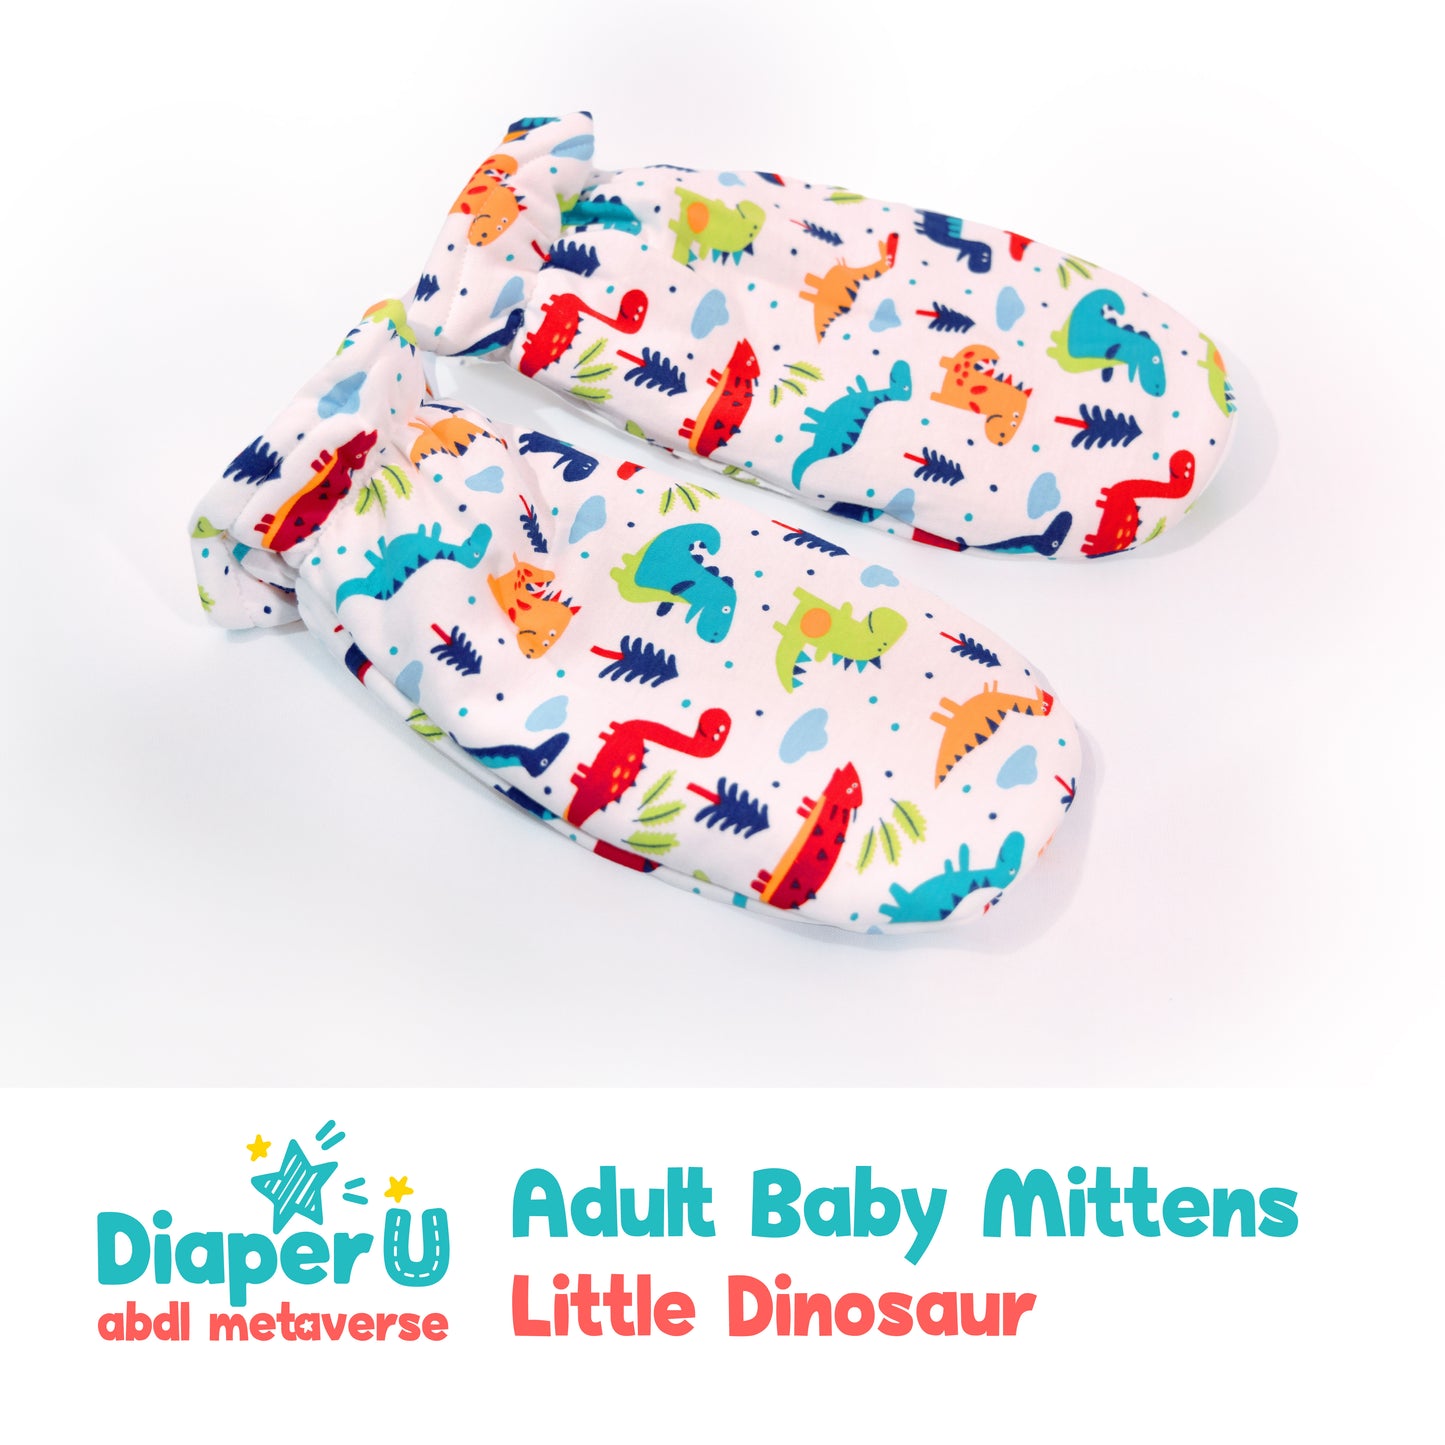 Adult Baby Mittens - Little Dinosaur